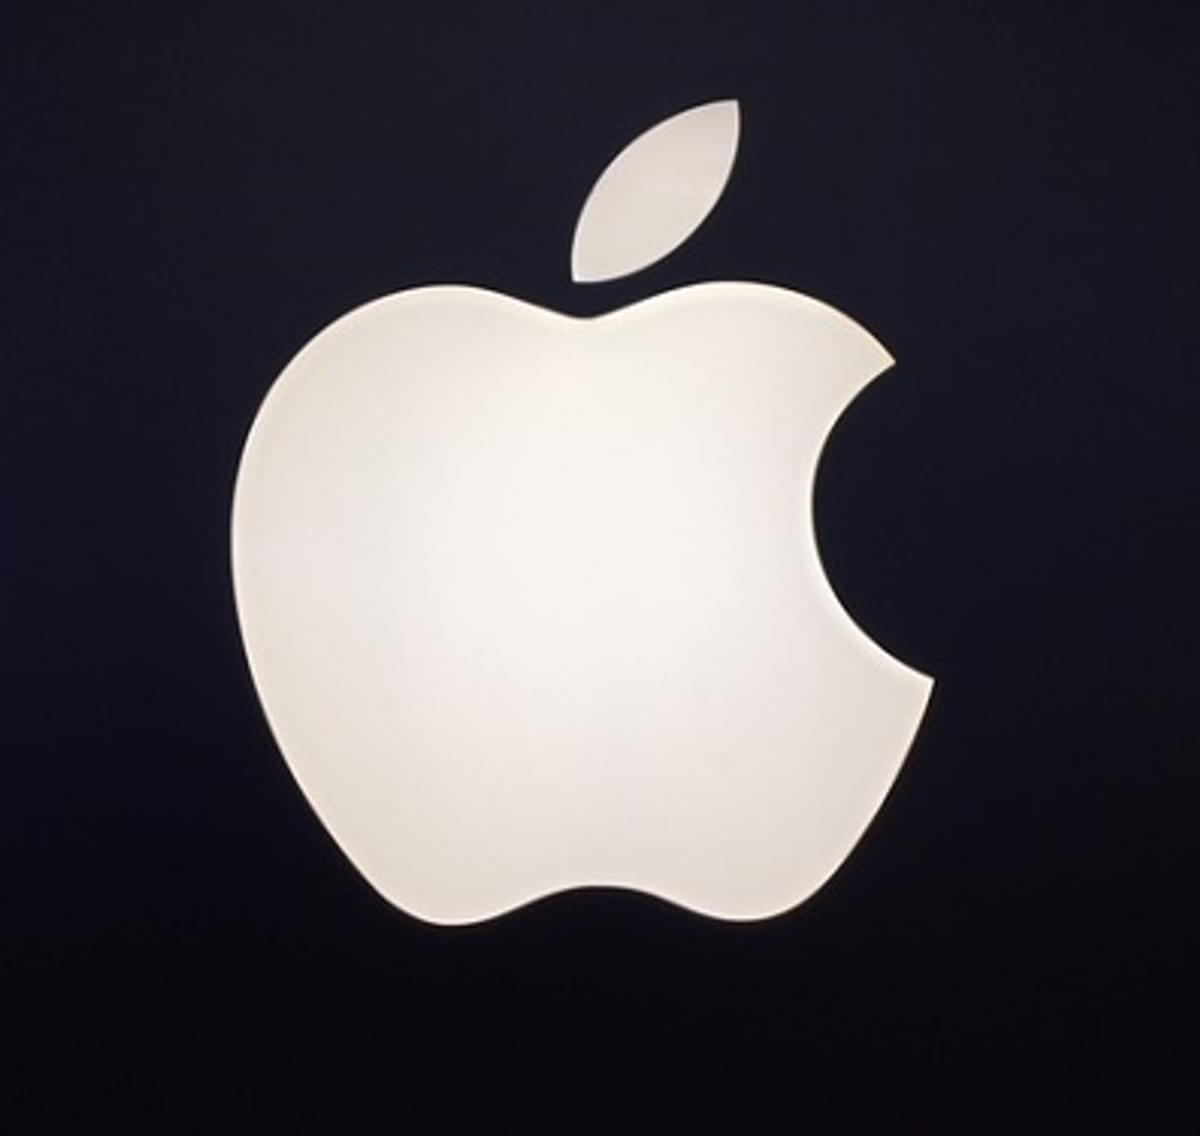 Apple App Store stopte in 2022 meer dan 2 miljard dollar aan frauduleuze transacties image